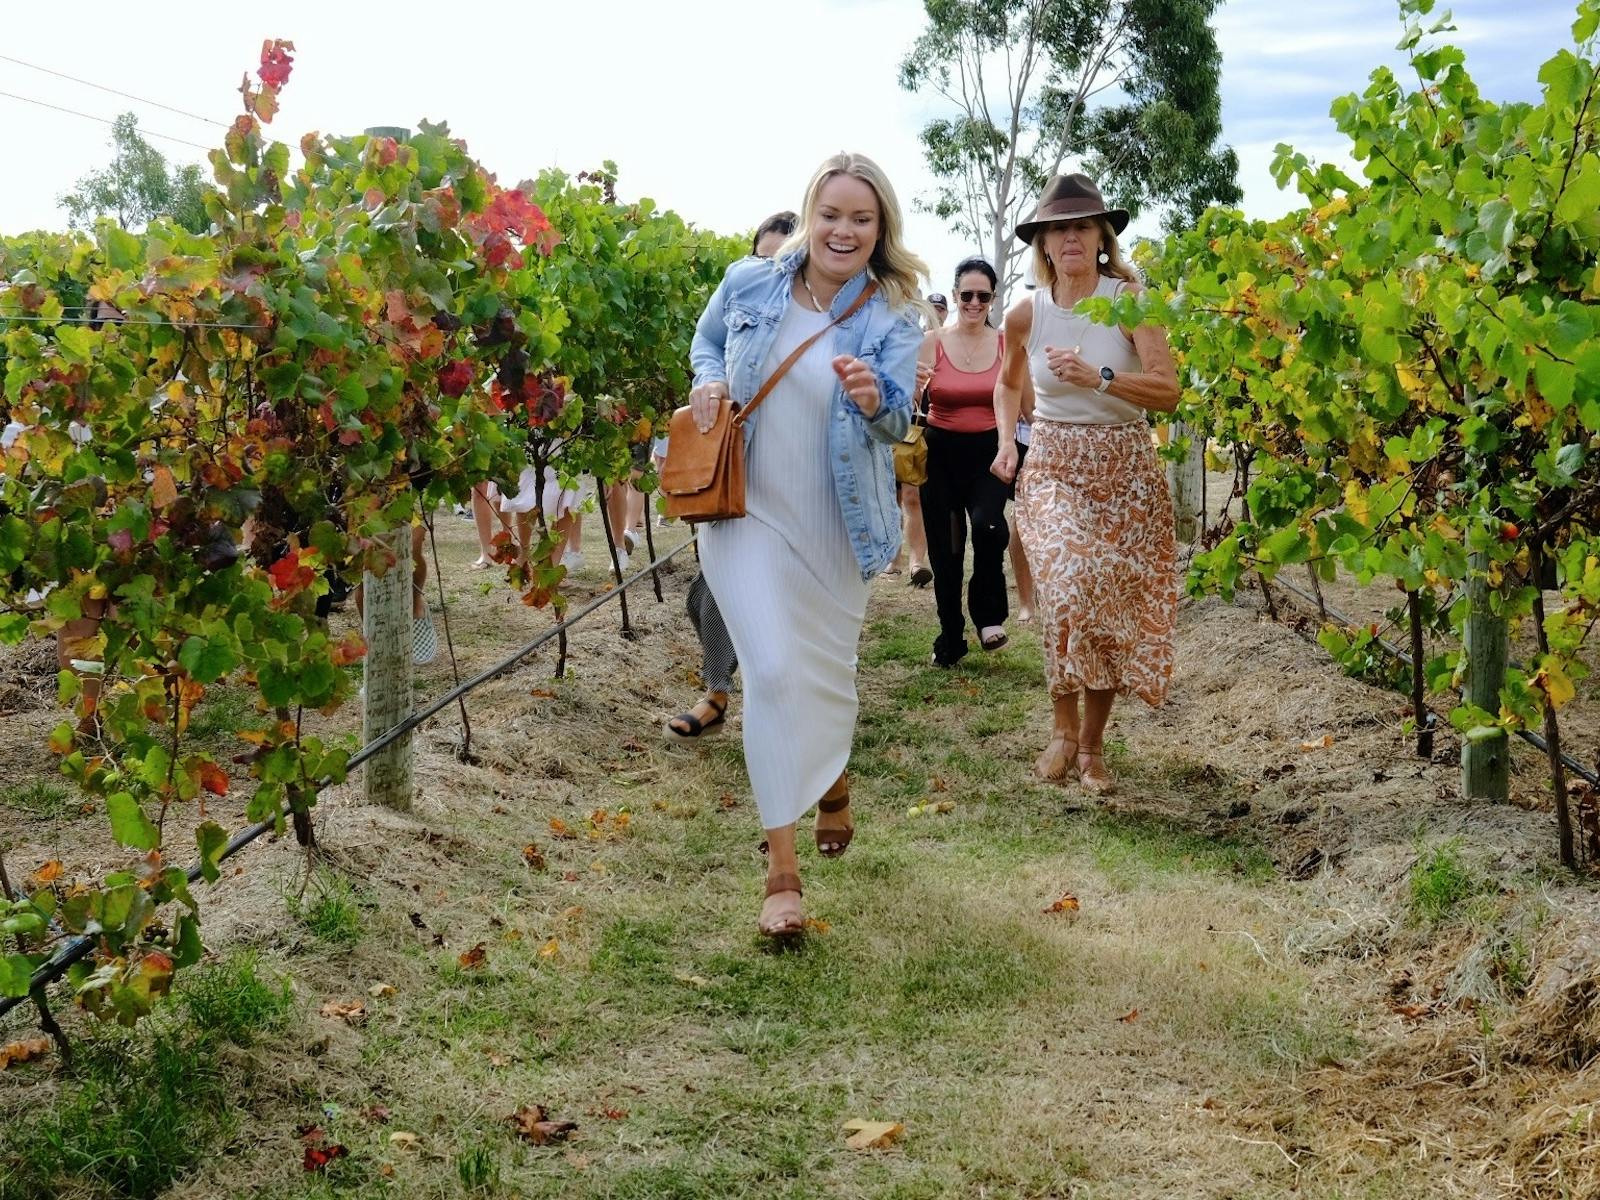 Women run down a vineyard looking for Easter eggs.